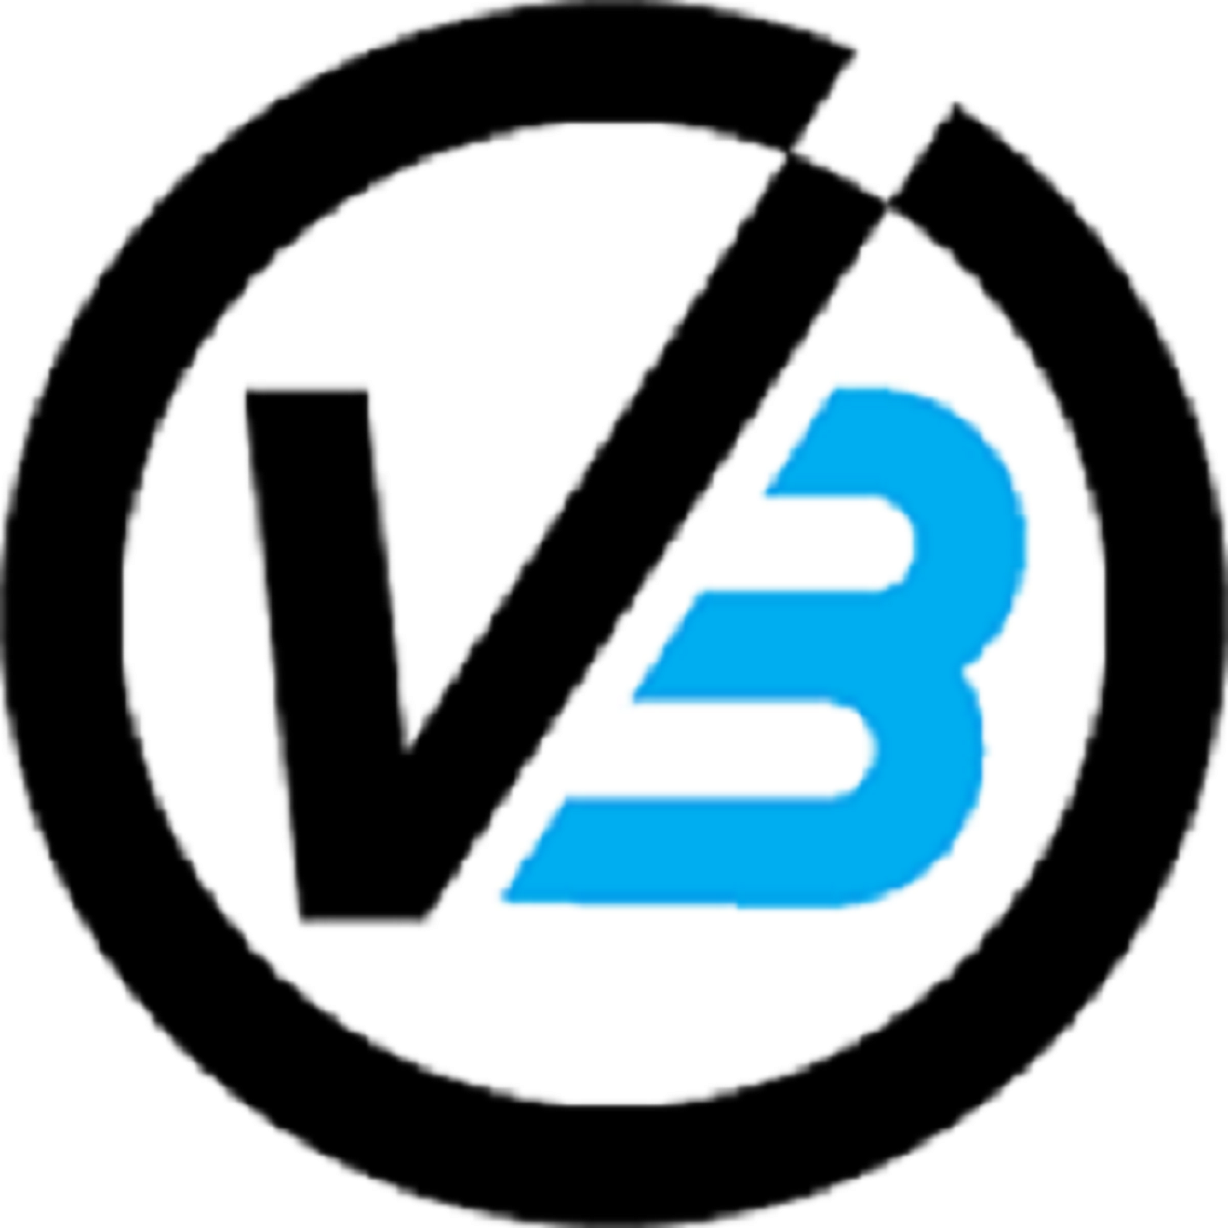 vapeblue Logo - Copy.png